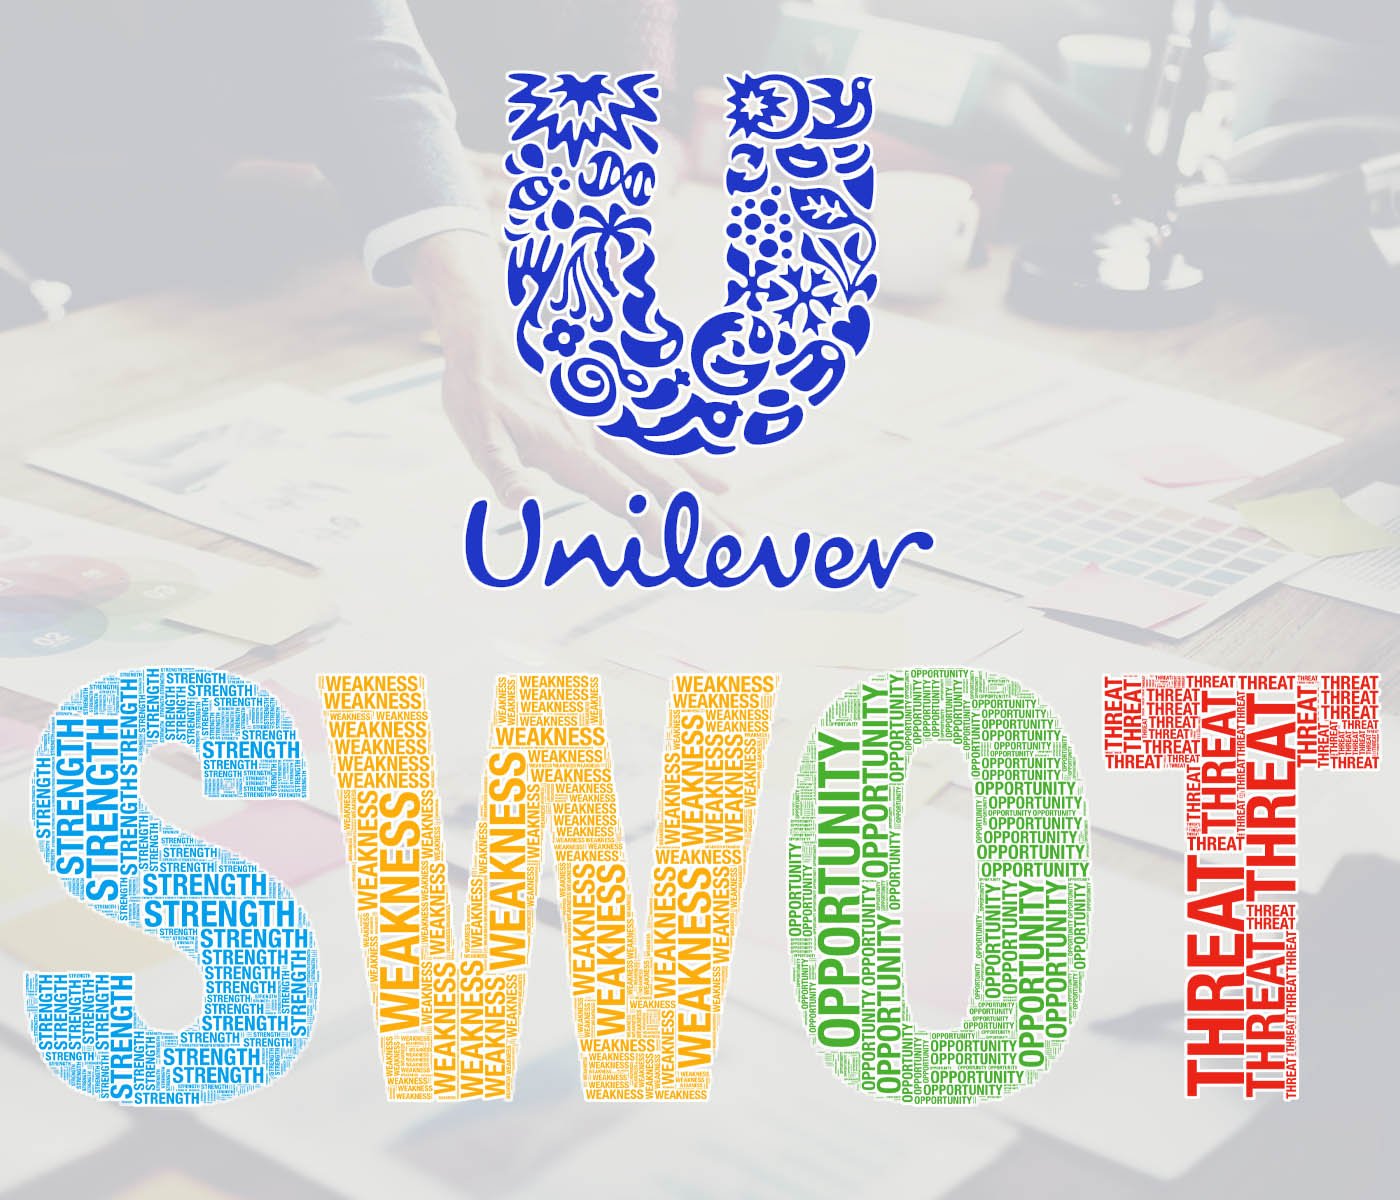 Unilever SWOT